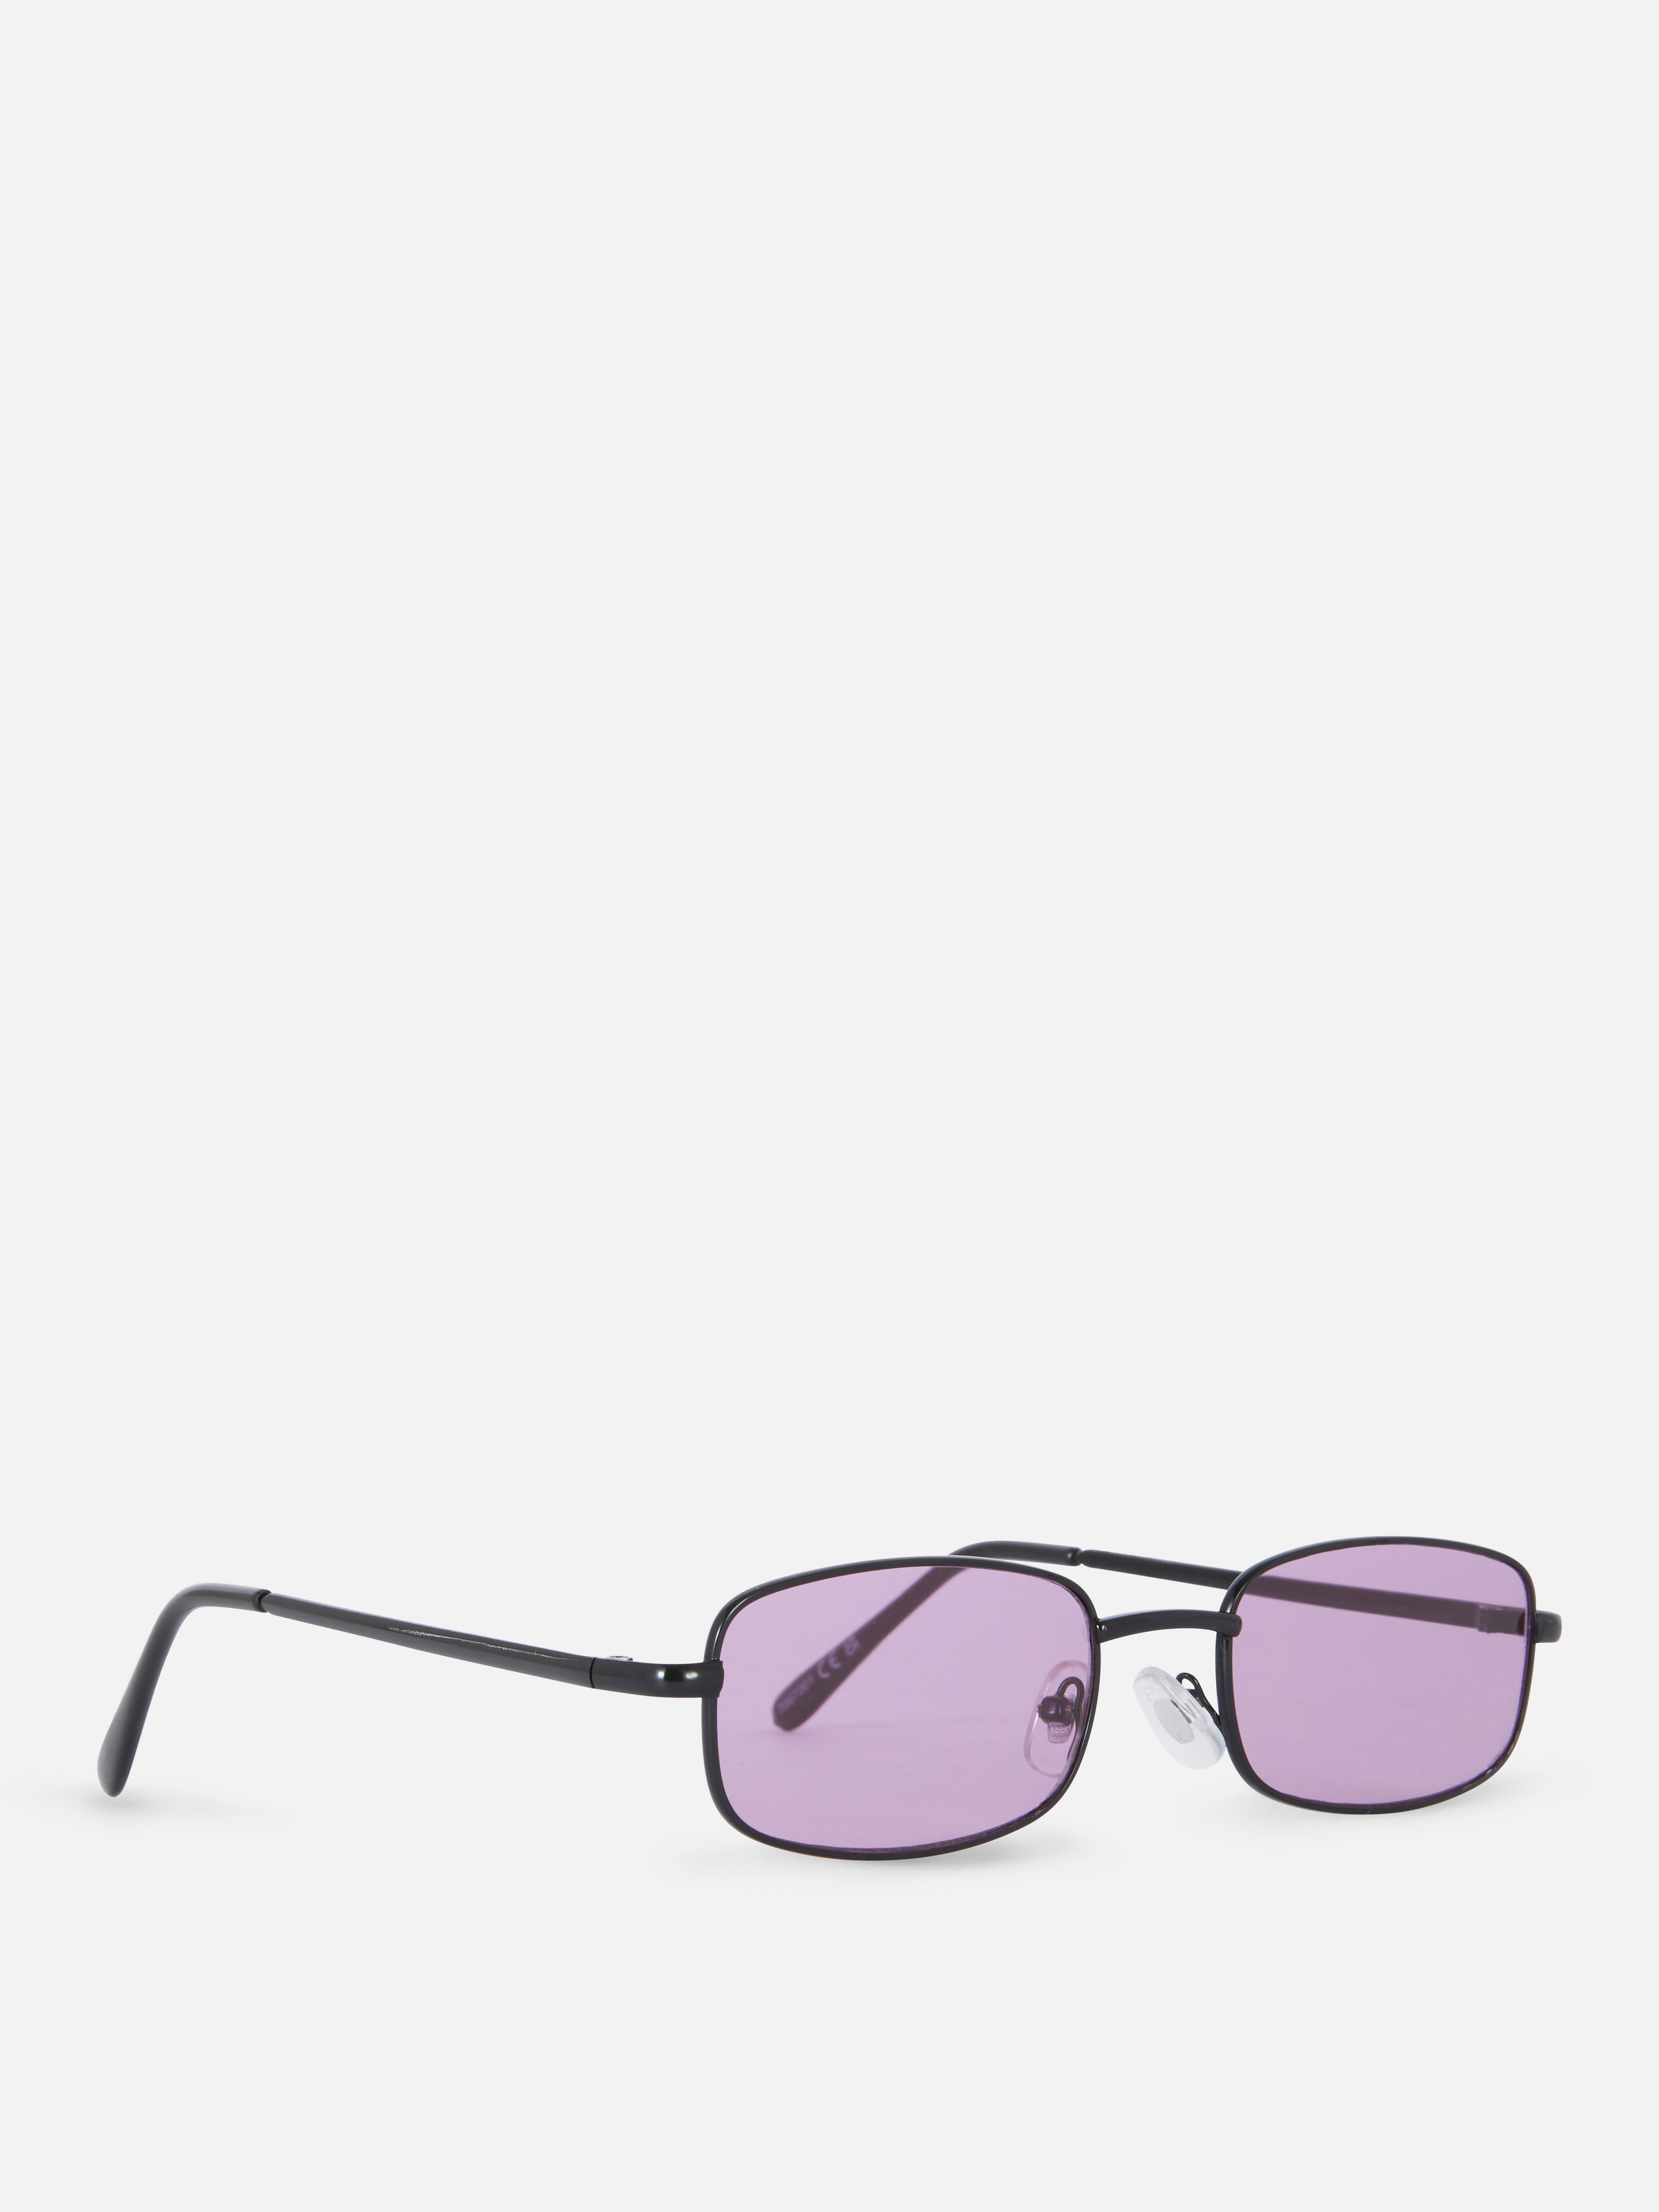 '90s Purple Lens Sunglasses